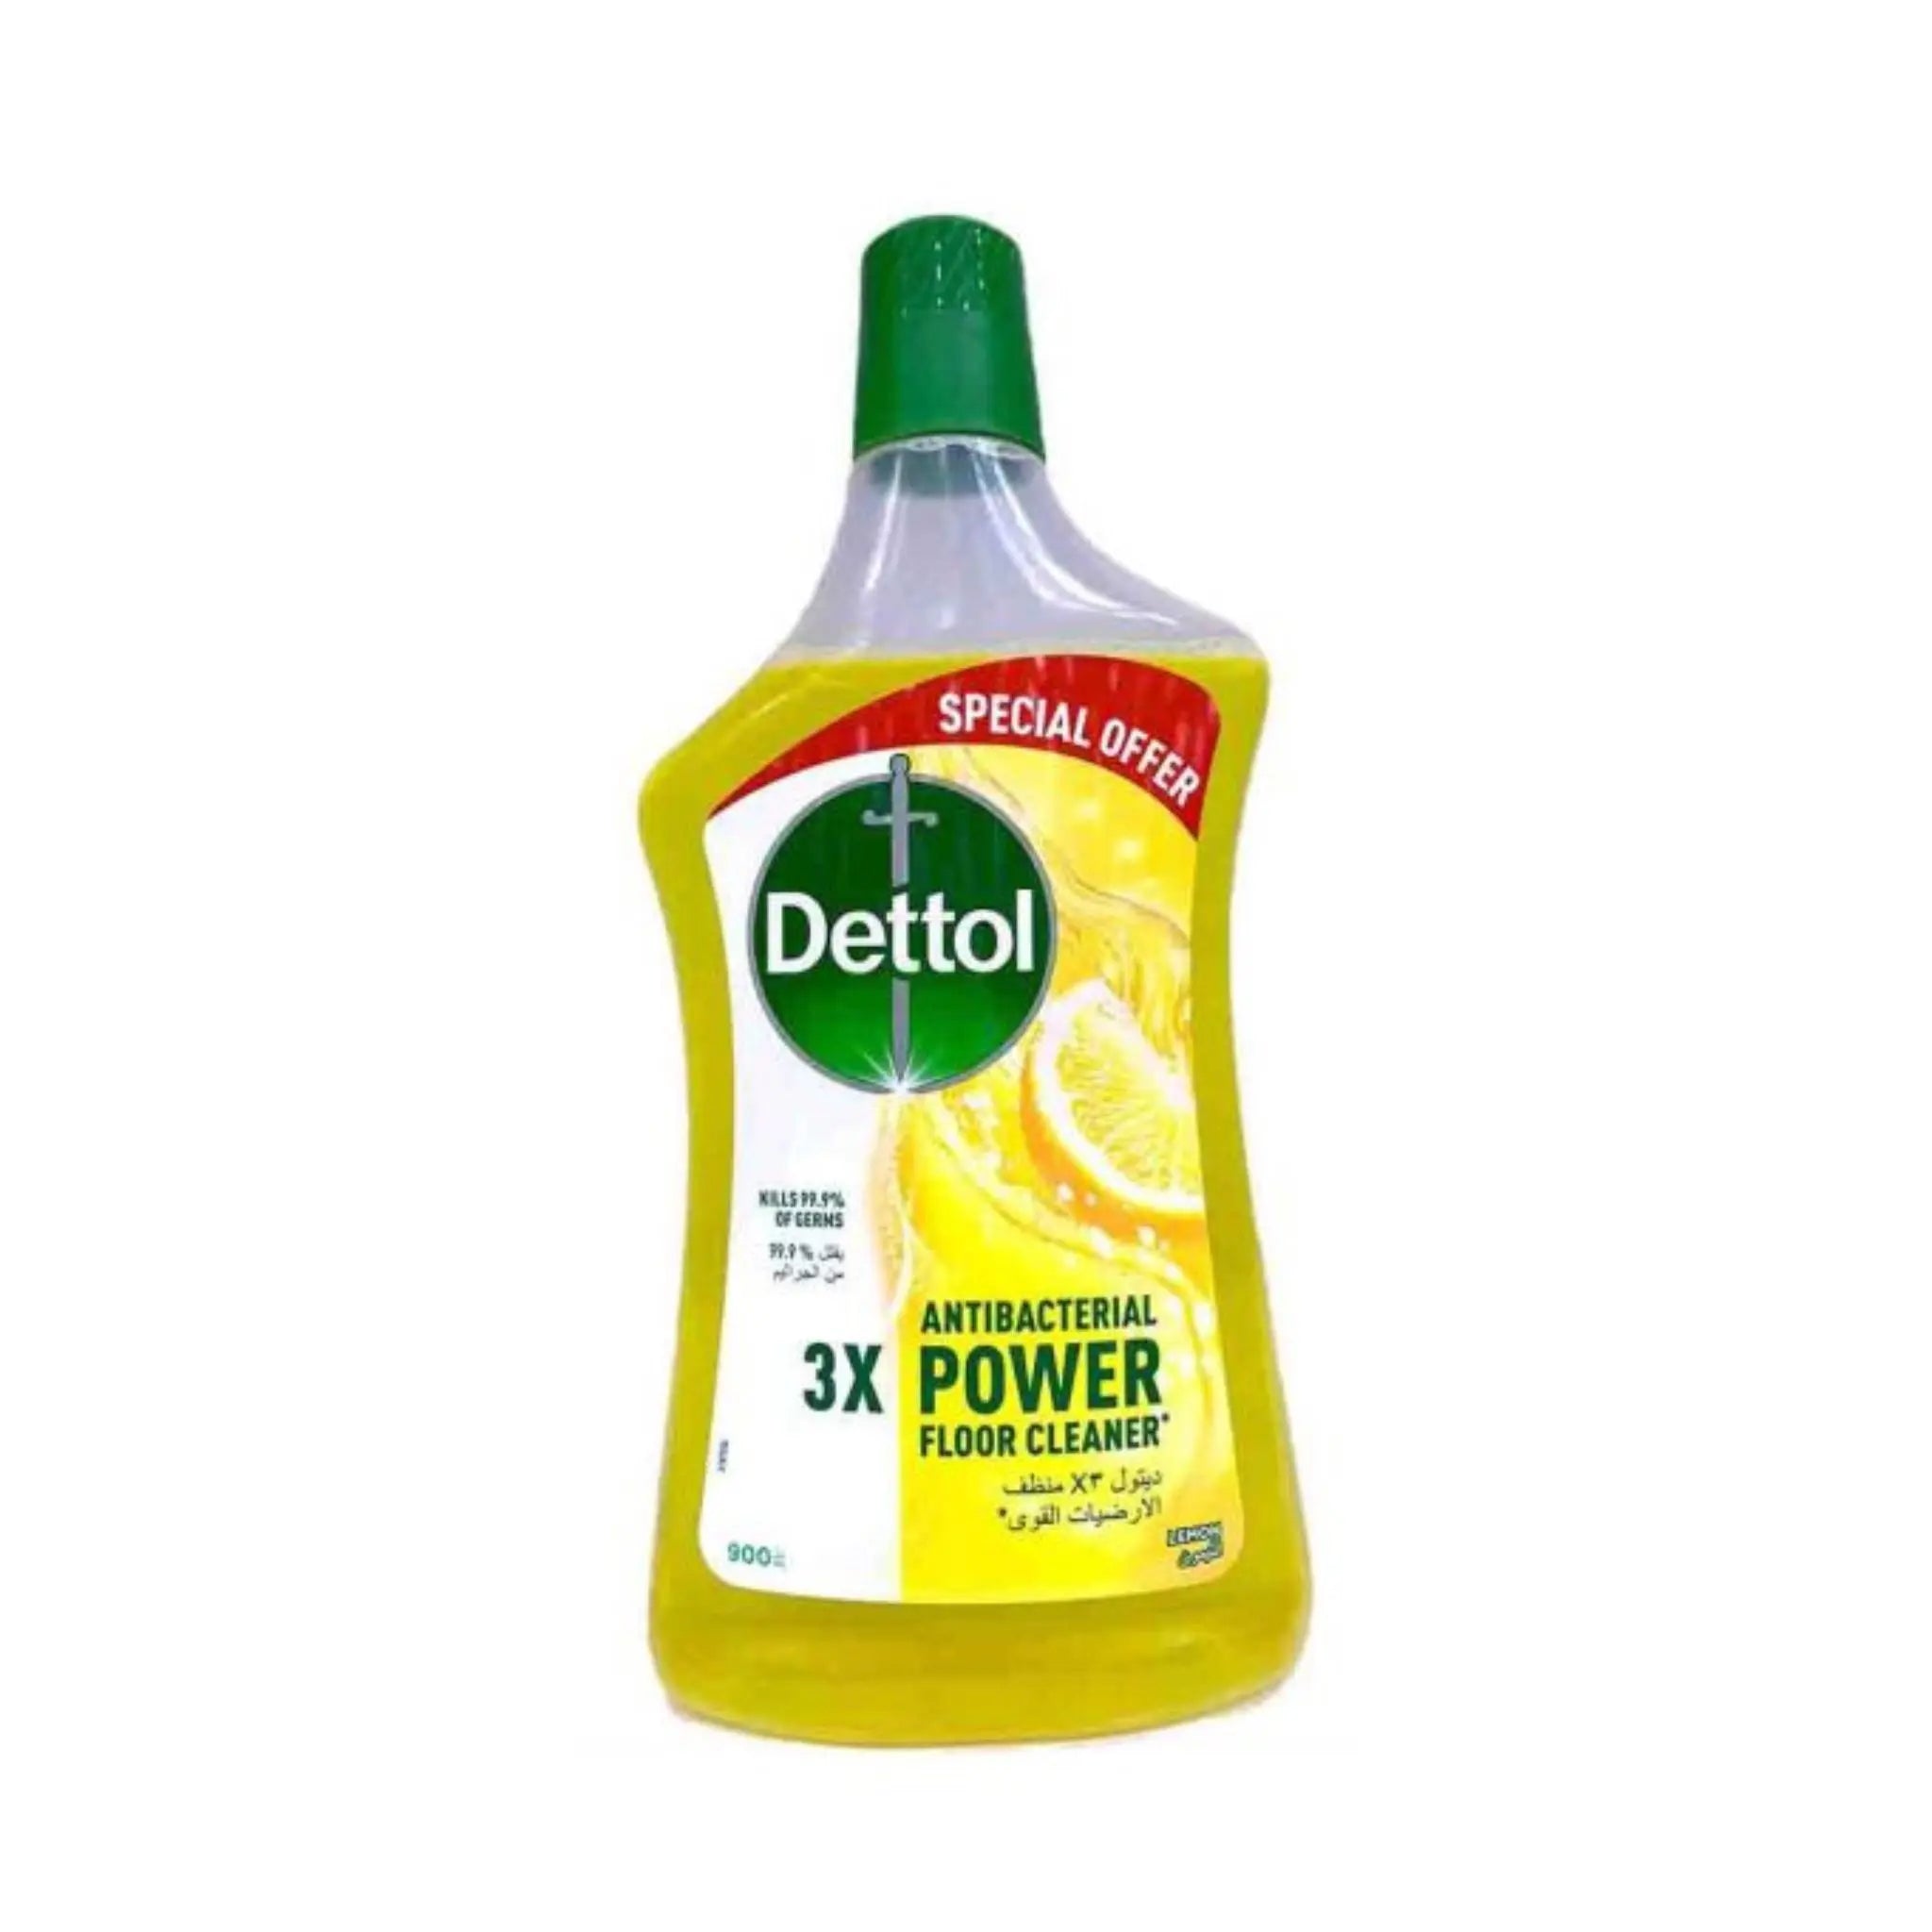 Dettol Anti-Bacterial 3X Power Floor Cleaner Lemon 900ml - 2x6 sets (1 carton) Marino.AE